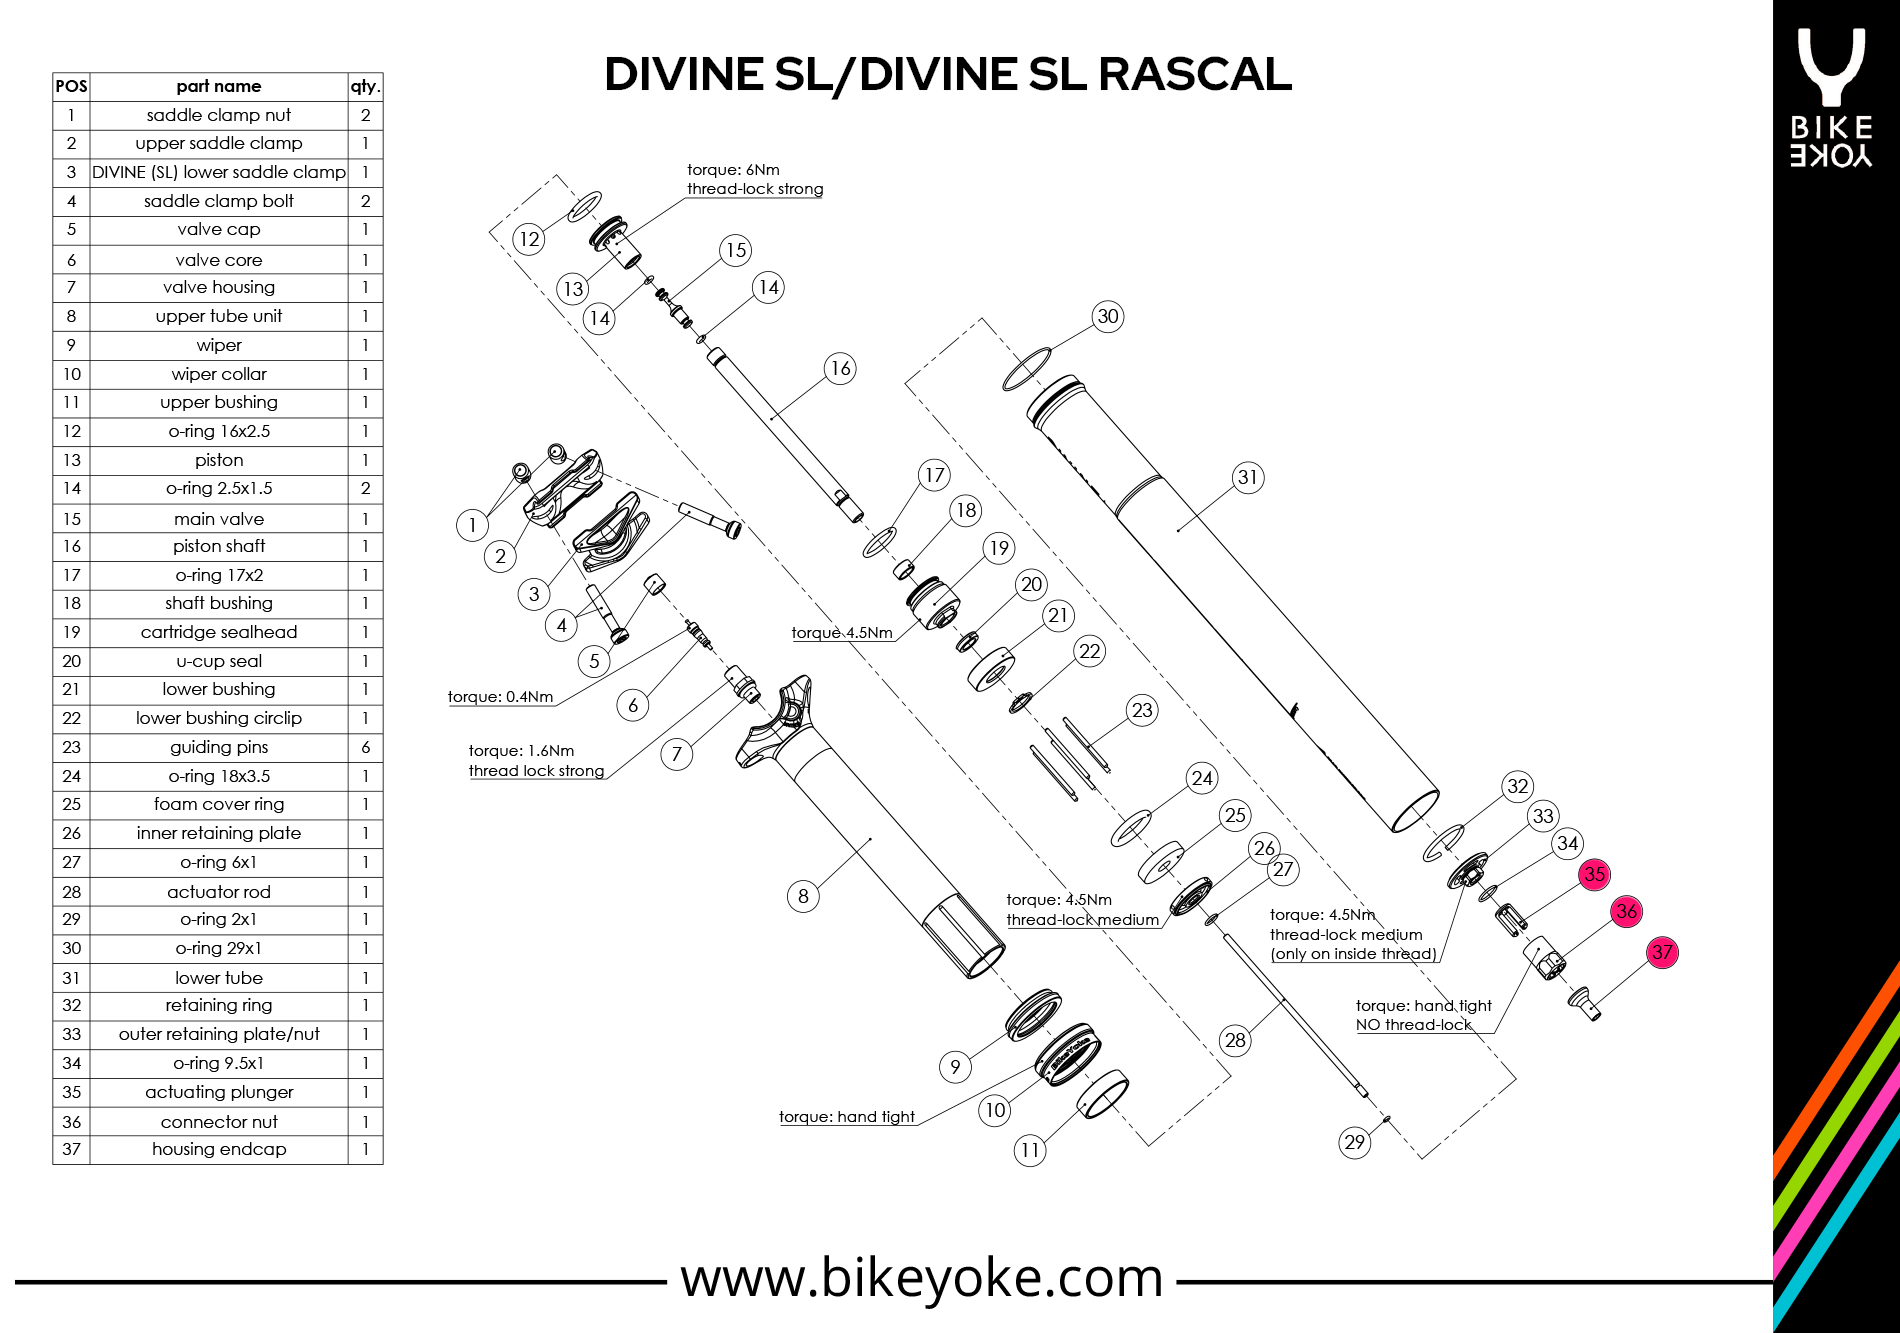 DIVINE SL / Rascal - connector kit